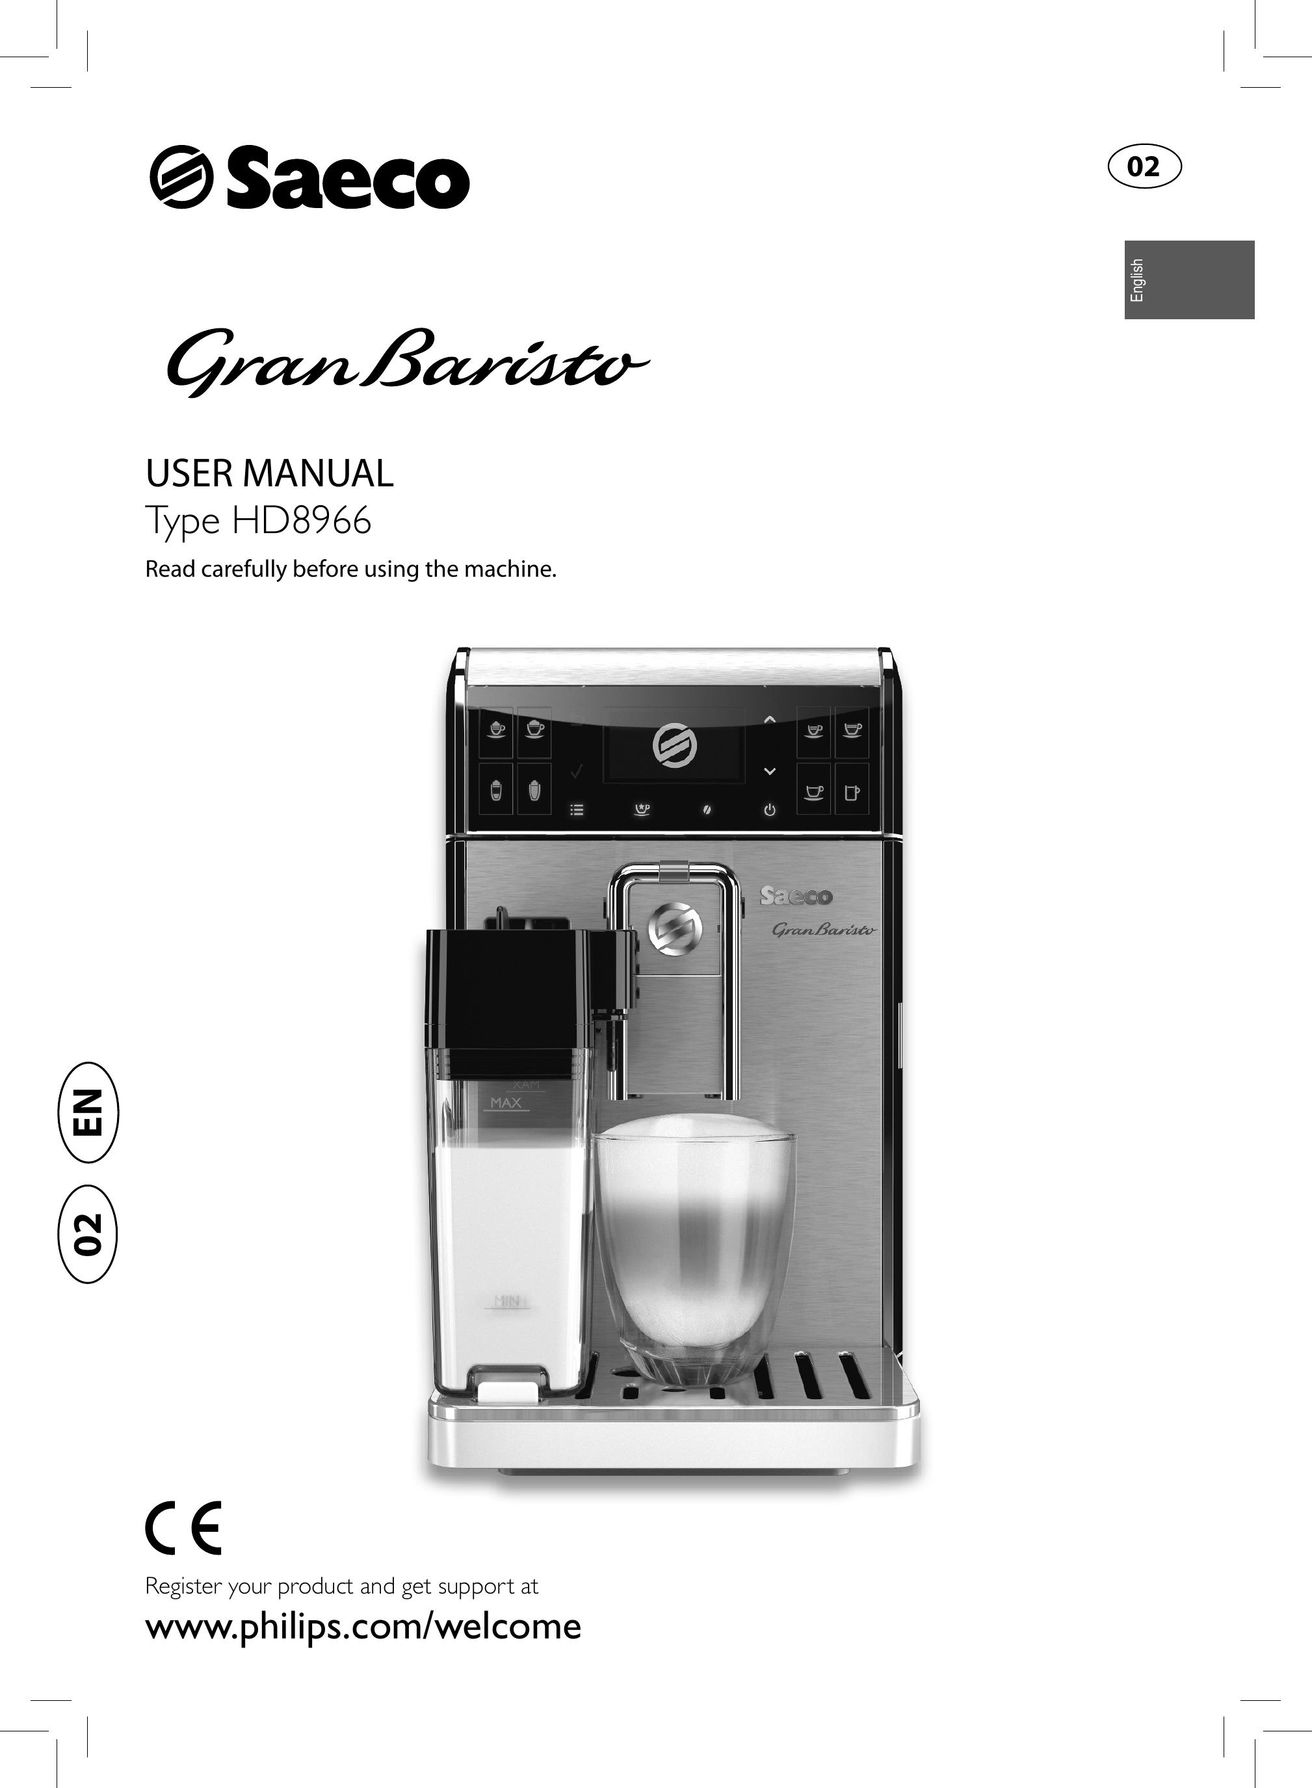 Saeco Coffee Makers HD8966 Coffeemaker User Manual